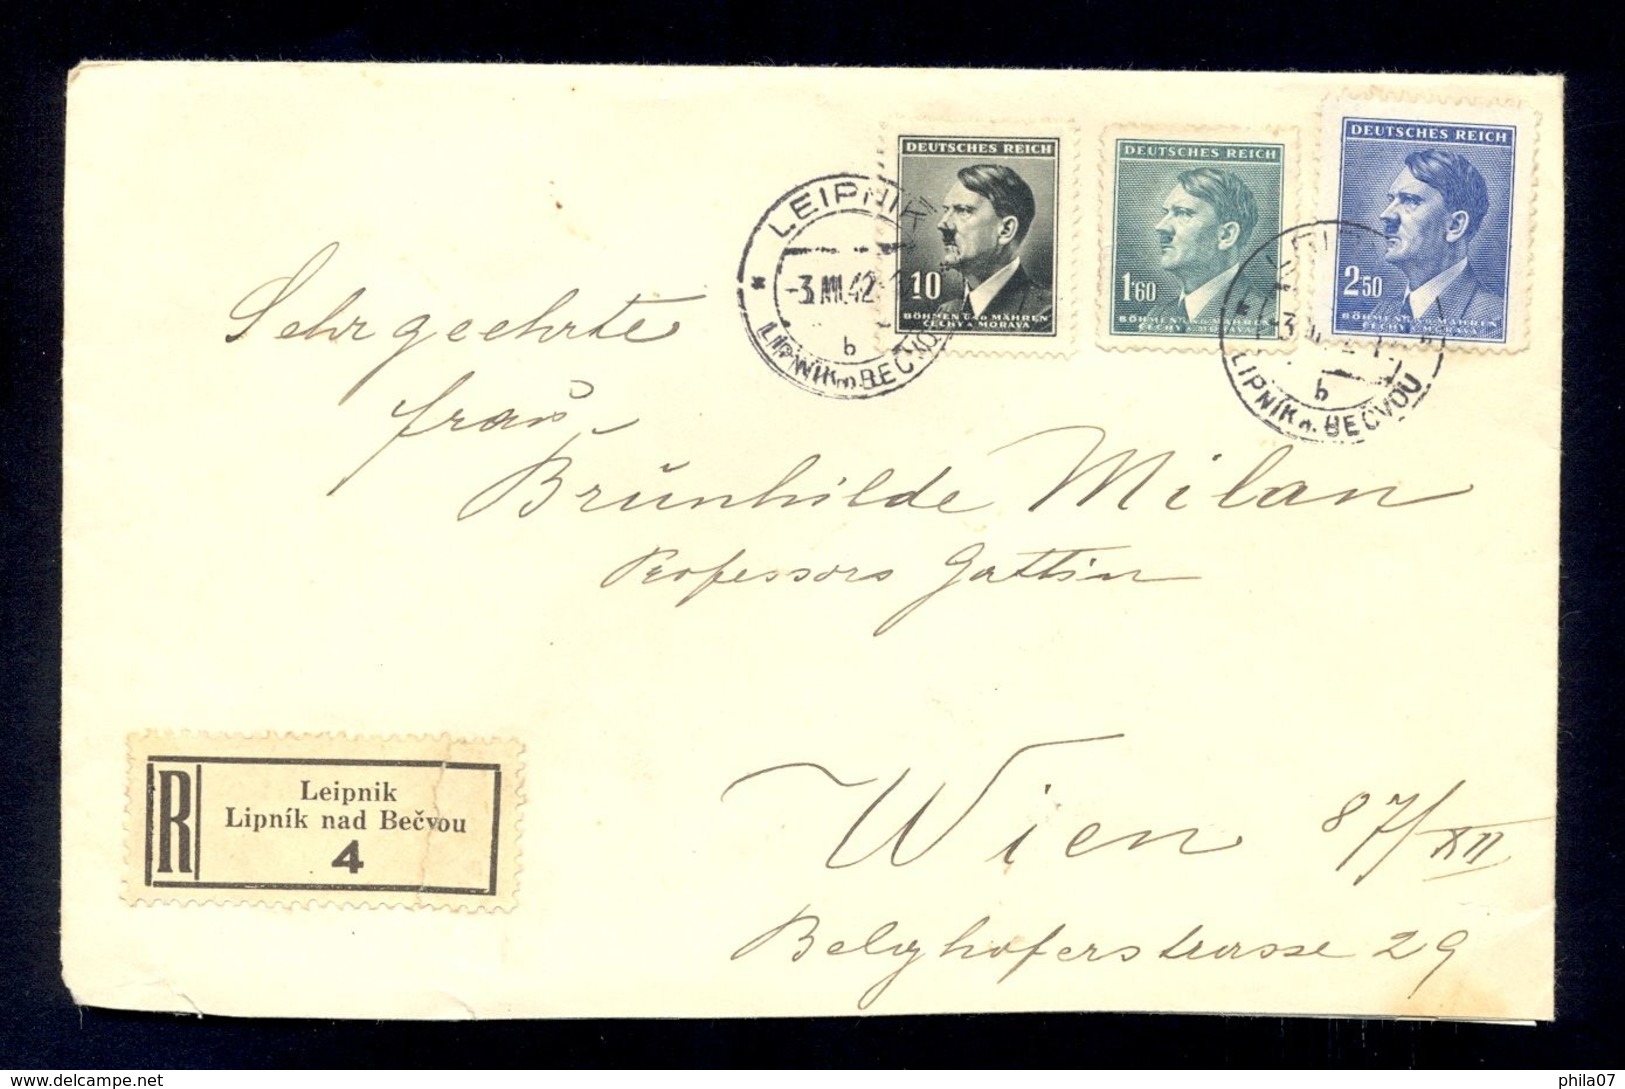 CZECHOSLOVAKIA PROTECTORATE - Envelope Sent By Registered Mail From Leipnik Lipnik Nad Bečvou To Wien 1942 - Briefe U. Dokumente